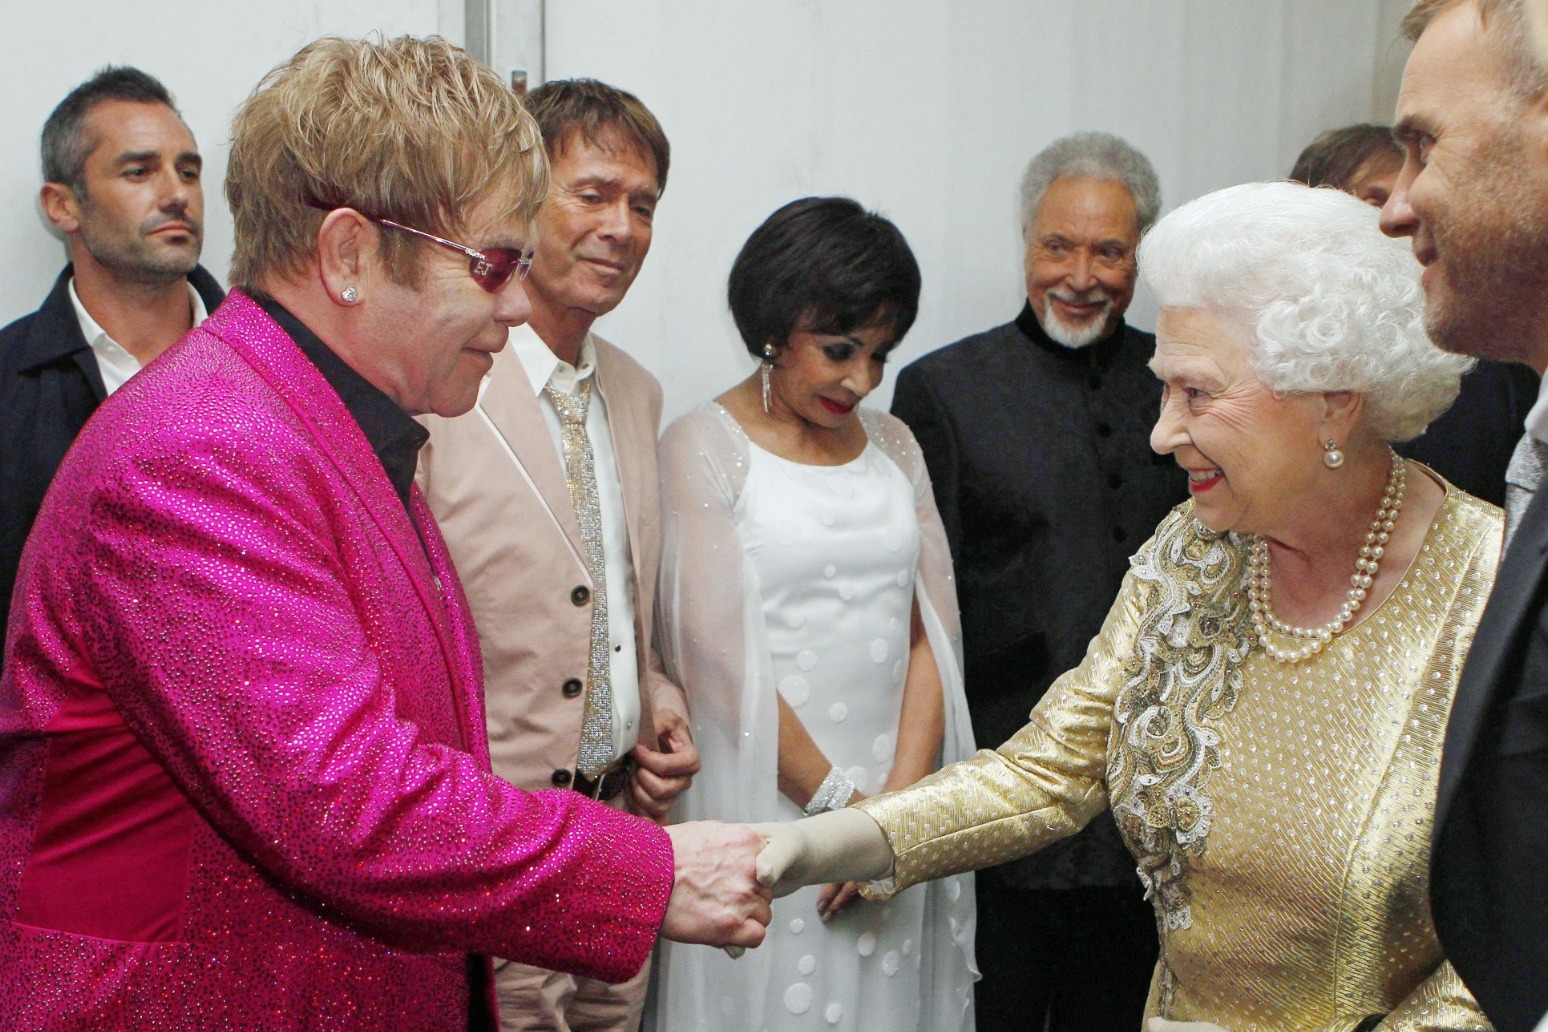 Sir Elton John leads British celebrity tributes to Queen’s ‘inspiring presence’ 